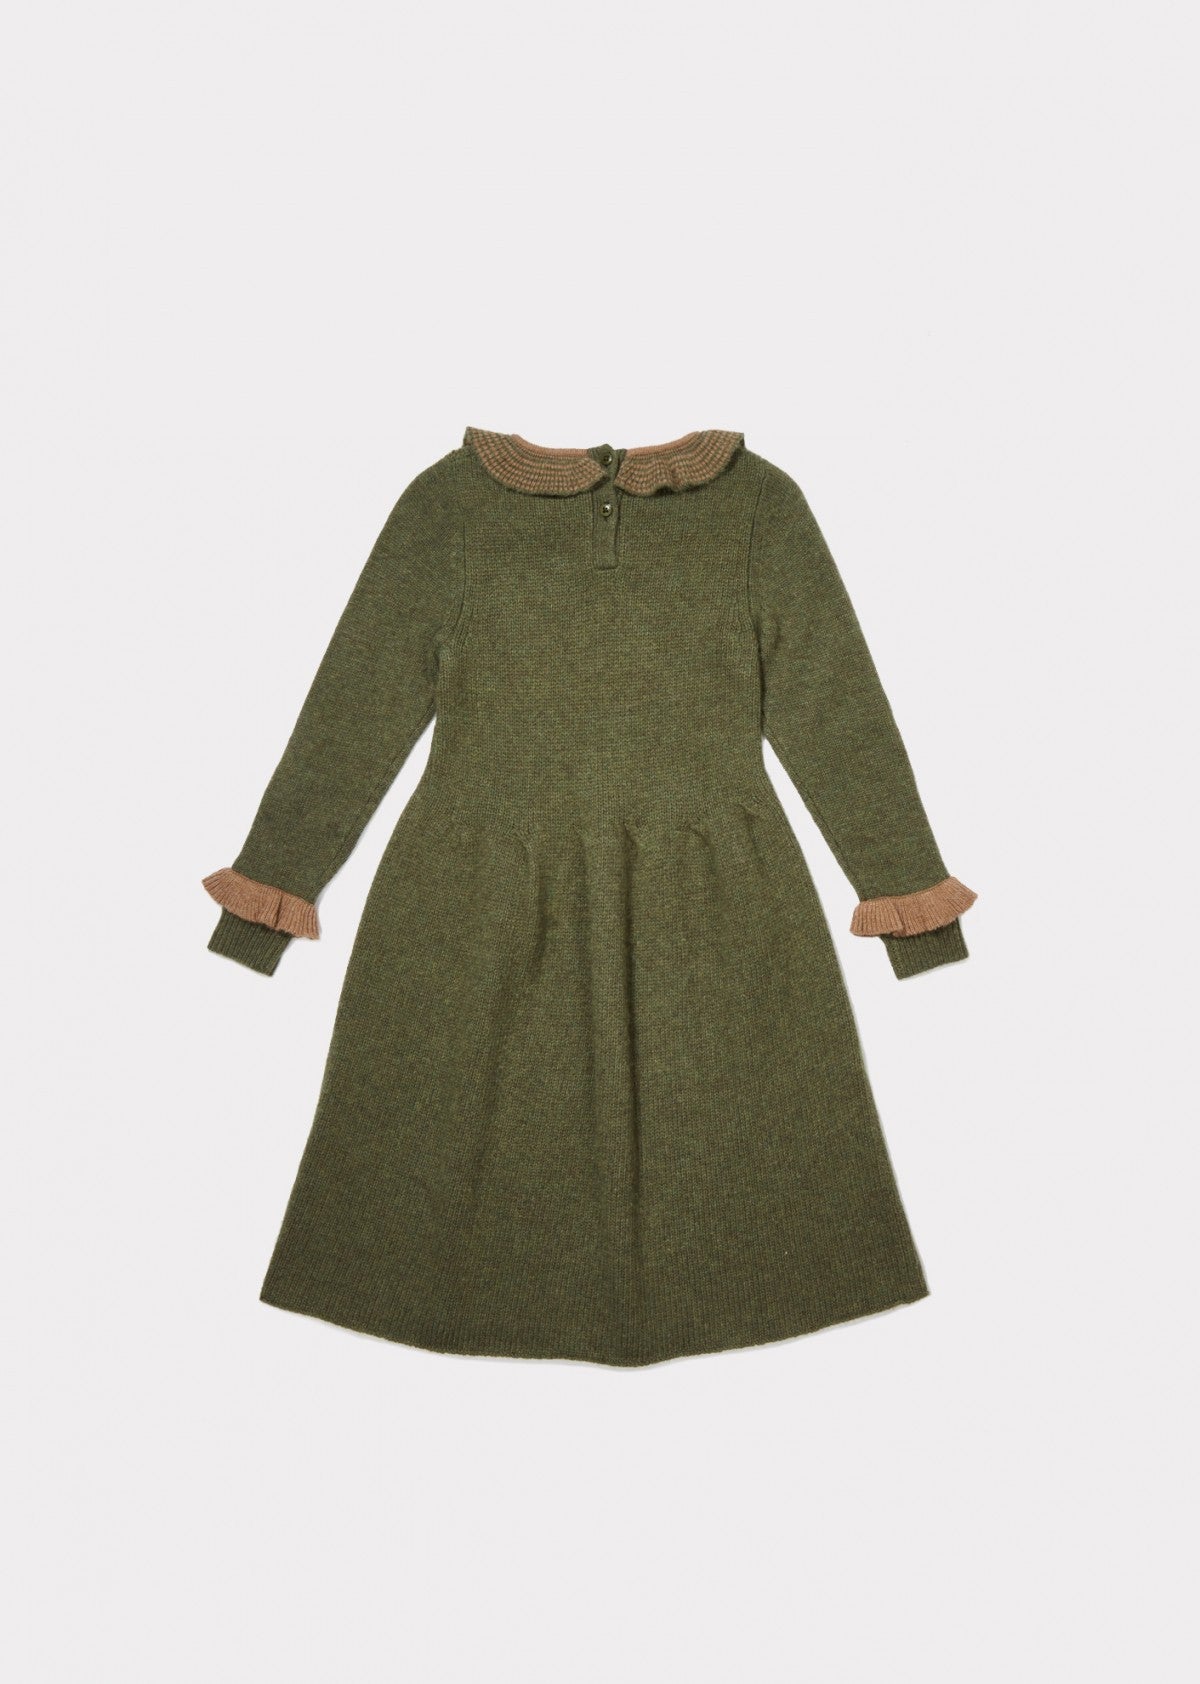 Girls Dark Green Knitted Dress